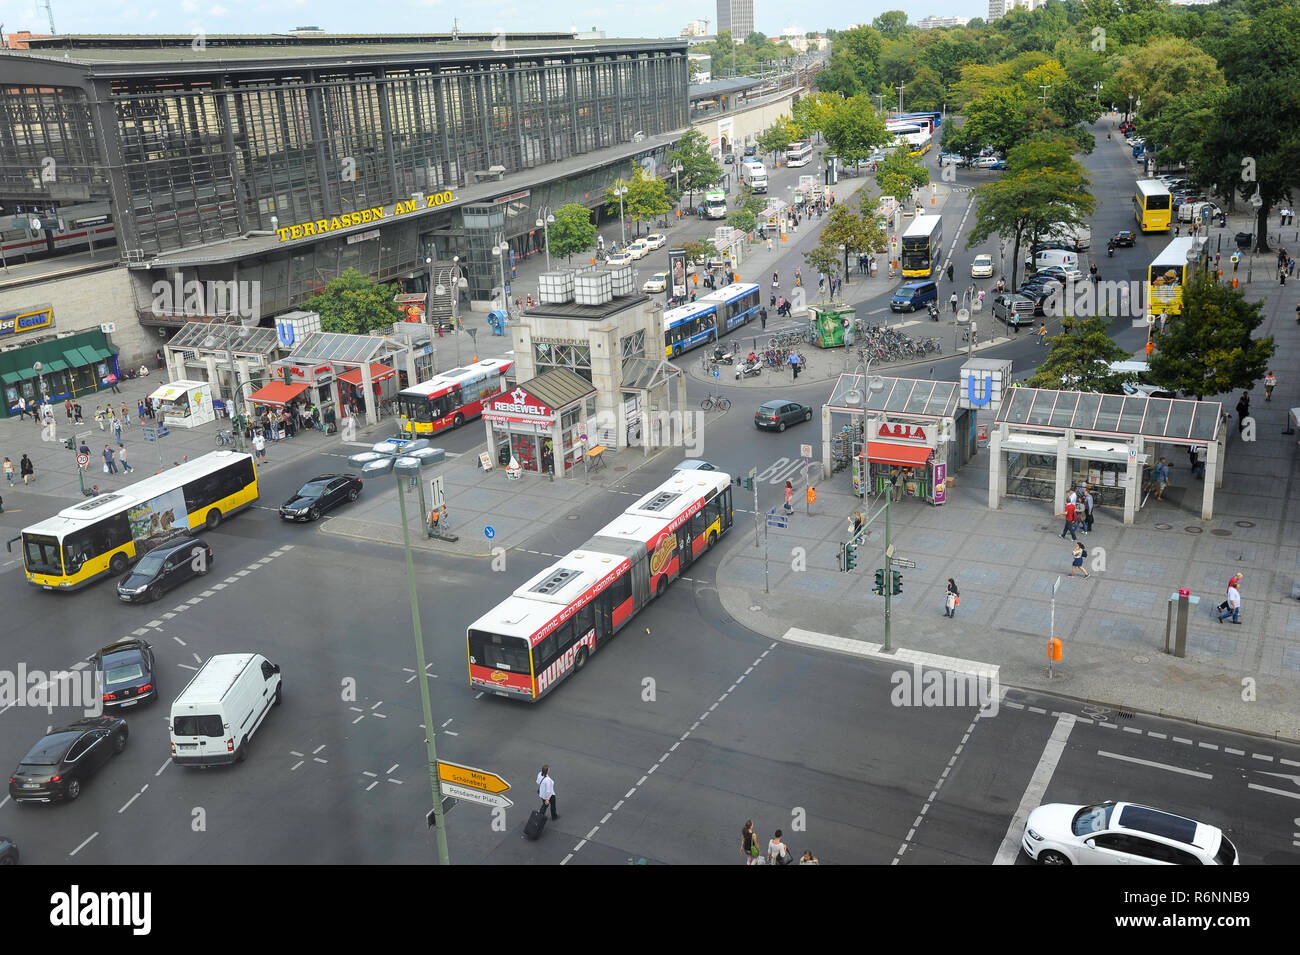 08.09.2014, Berlin, Germany, Europe - An elevated view of the Bahnhof Zoo railway station at Hardenbergplatz square in Berlin-Charlottenburg. Stock Photo